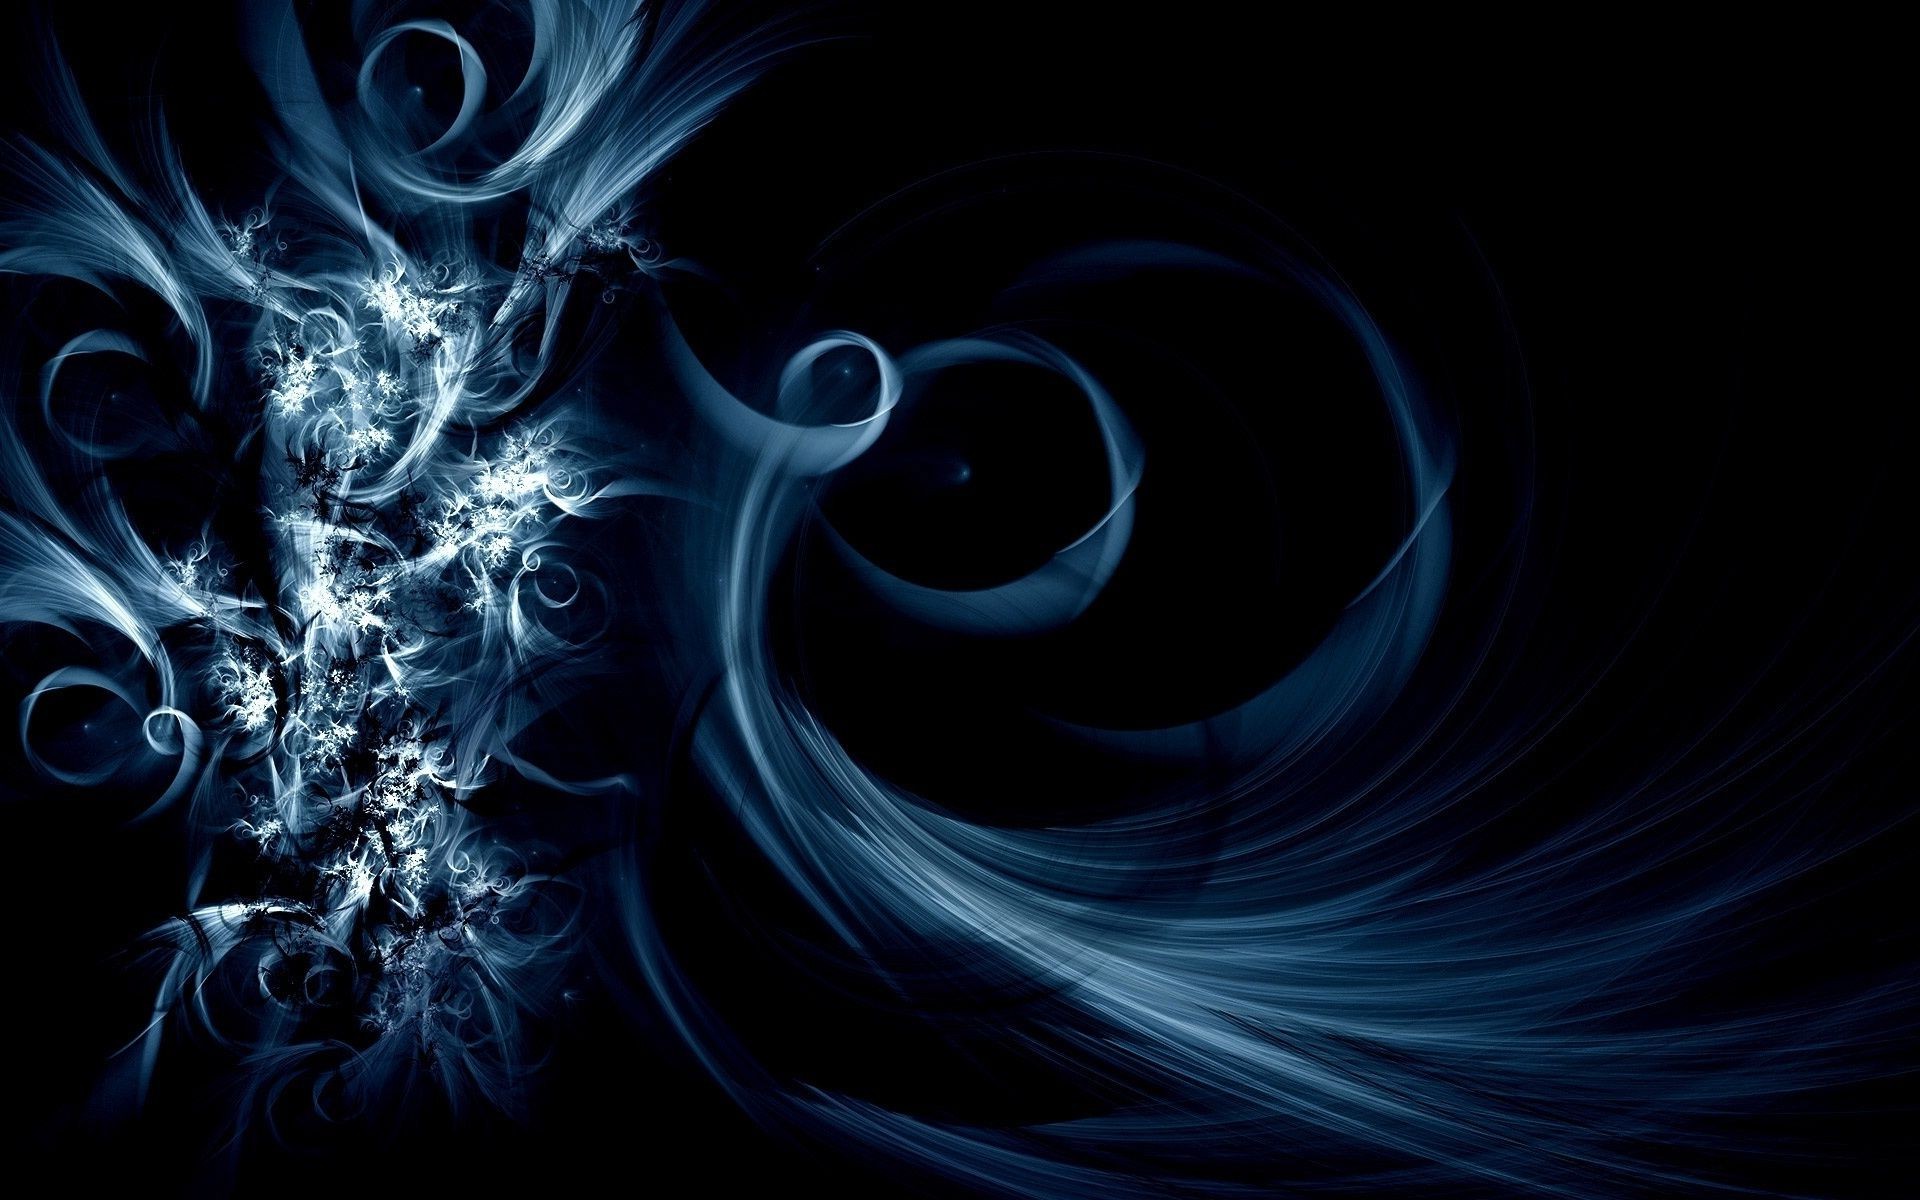 abstract flame light curve wave dynamic energy motion design fractal smoke graphic shape art blur desktop fantasy space illustration color